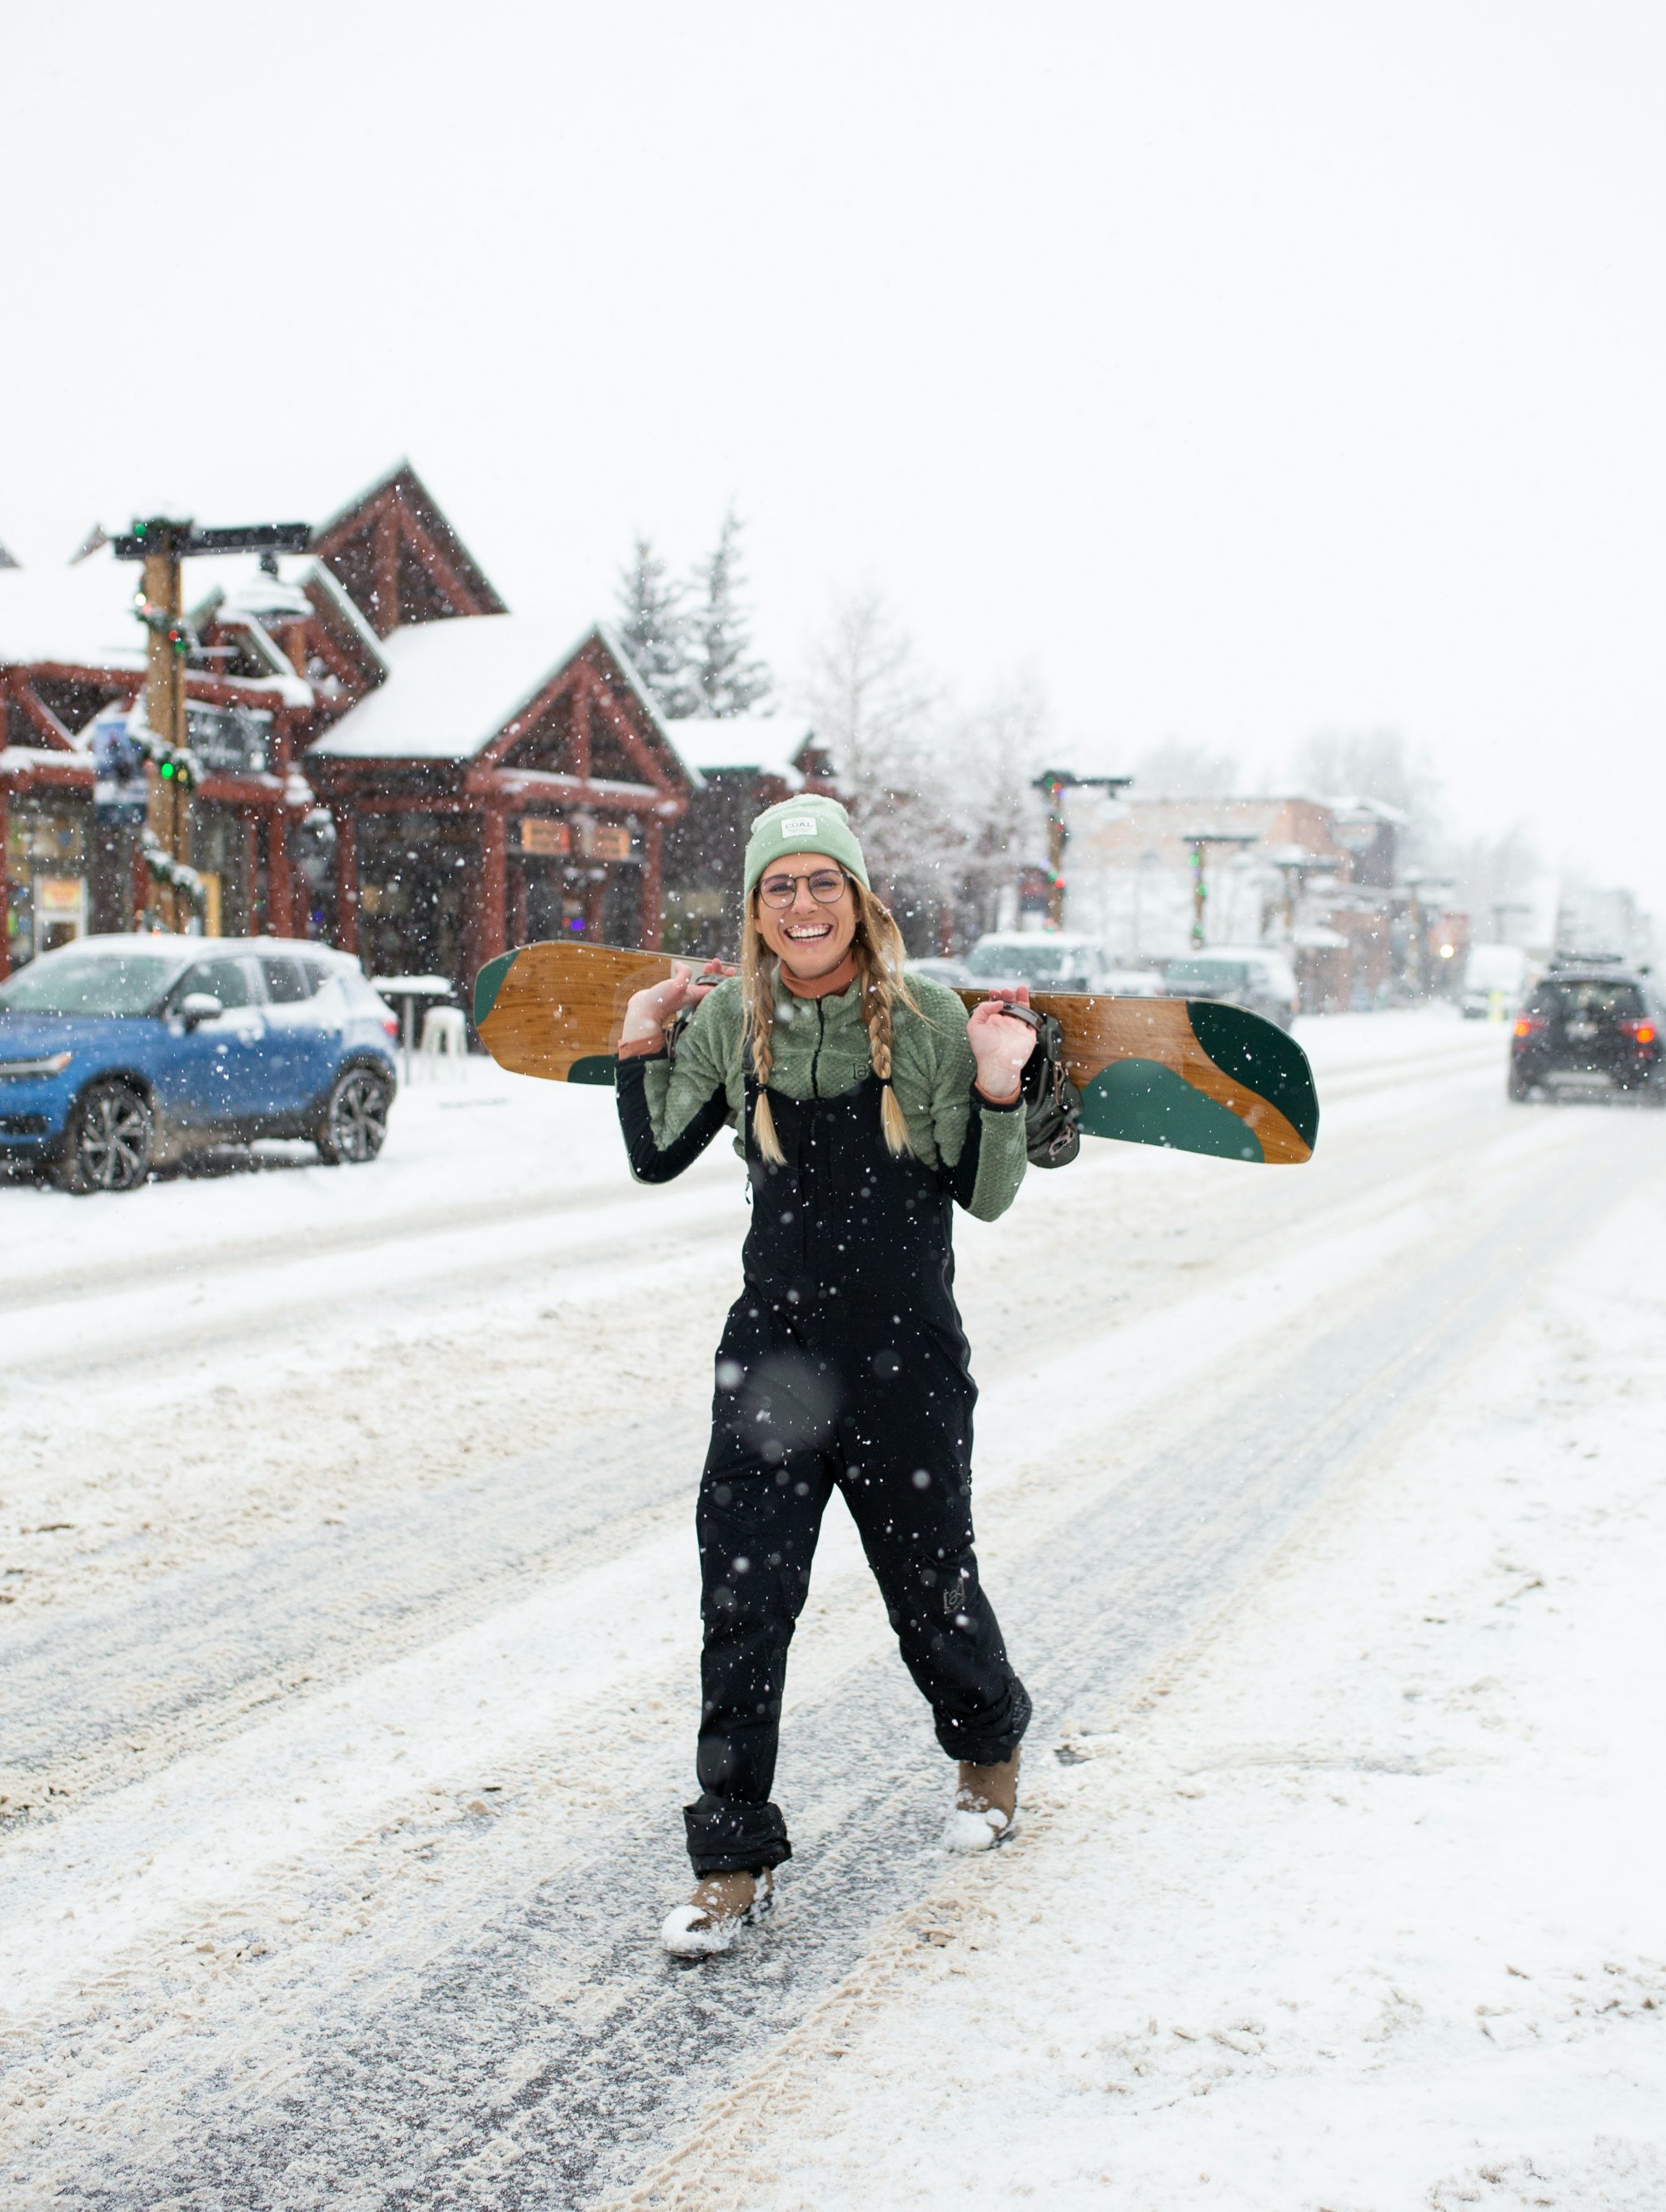 Snowboard Expert Kat Miller